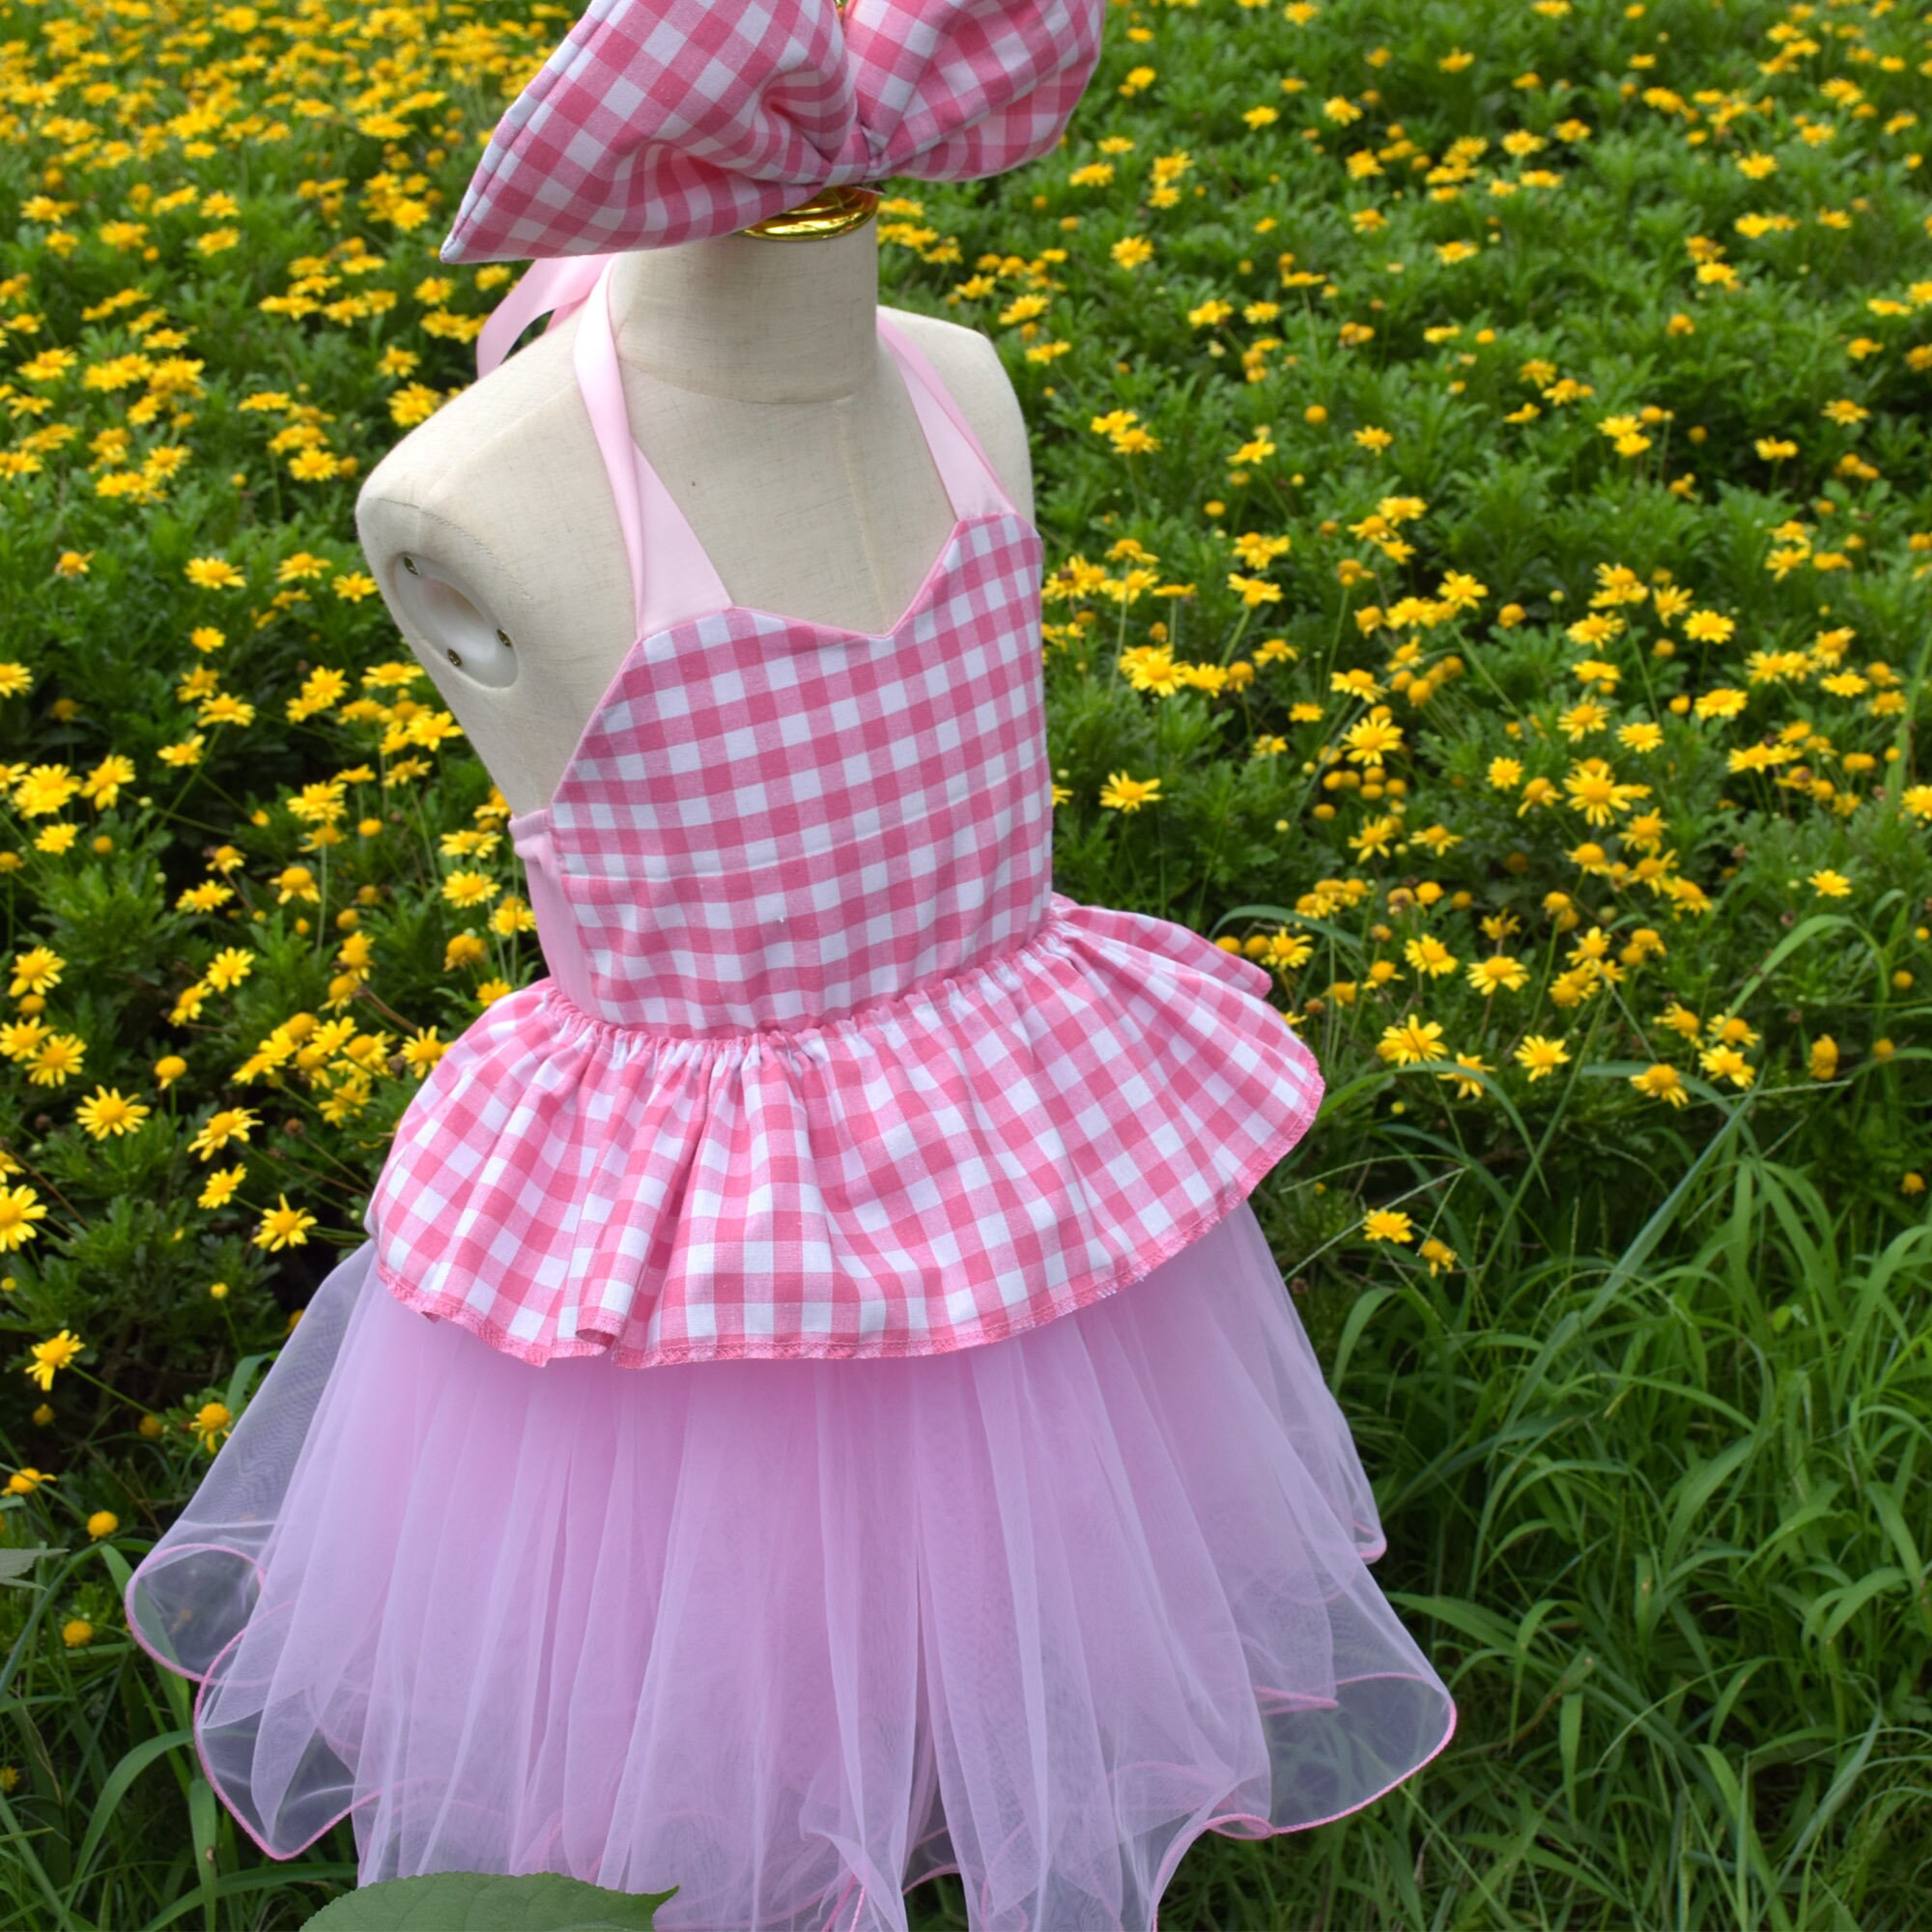 Kids Girls Pink Barbie Costume Princess Party Fancy Dress Tartan Skirt  Outfit